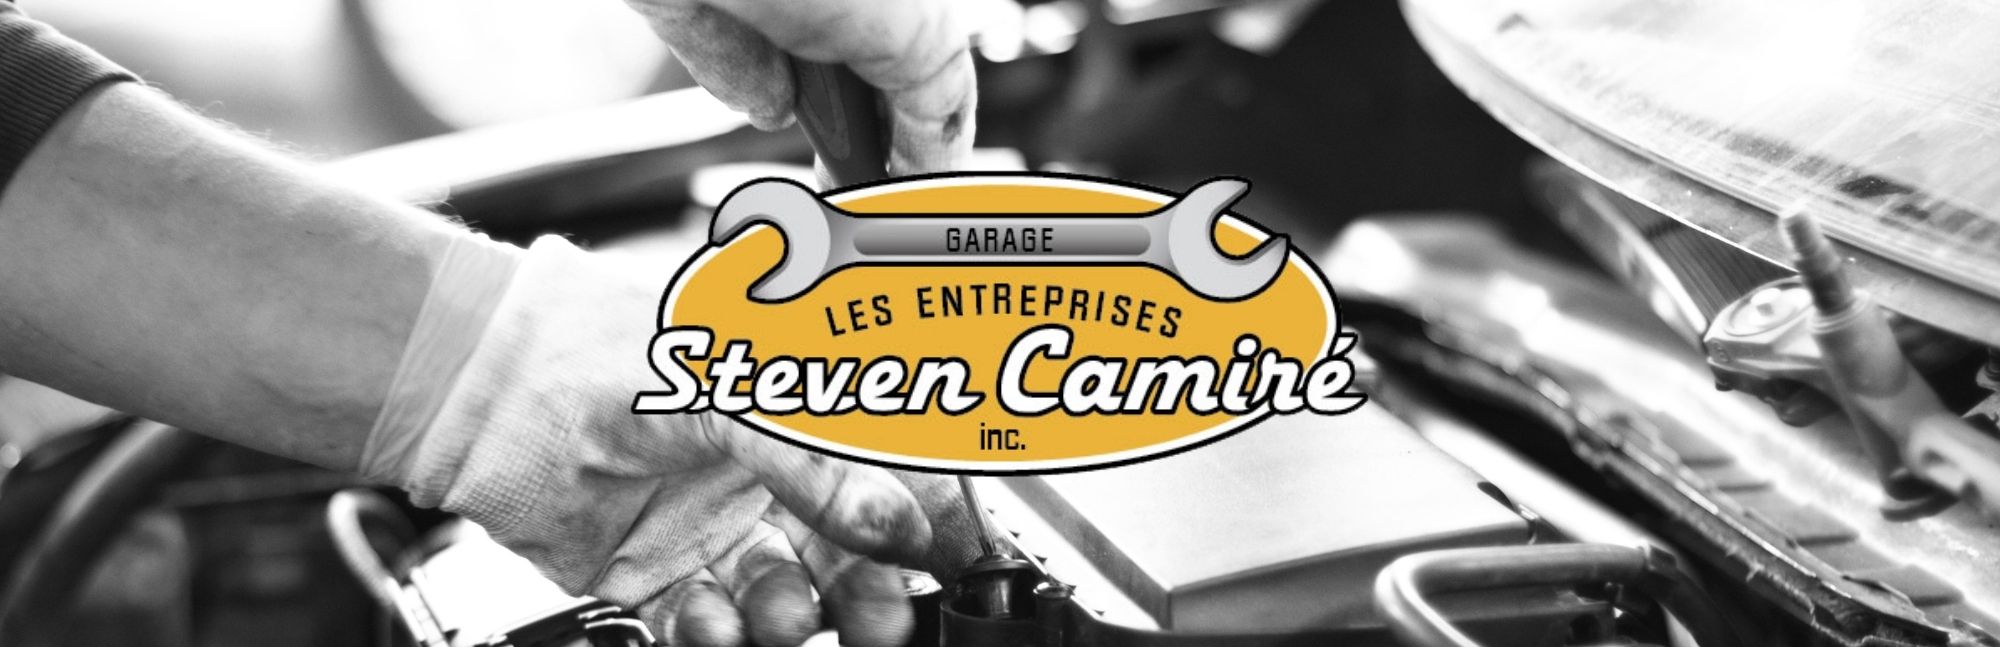 Garage Steven Camiré Saint Narcisse 1